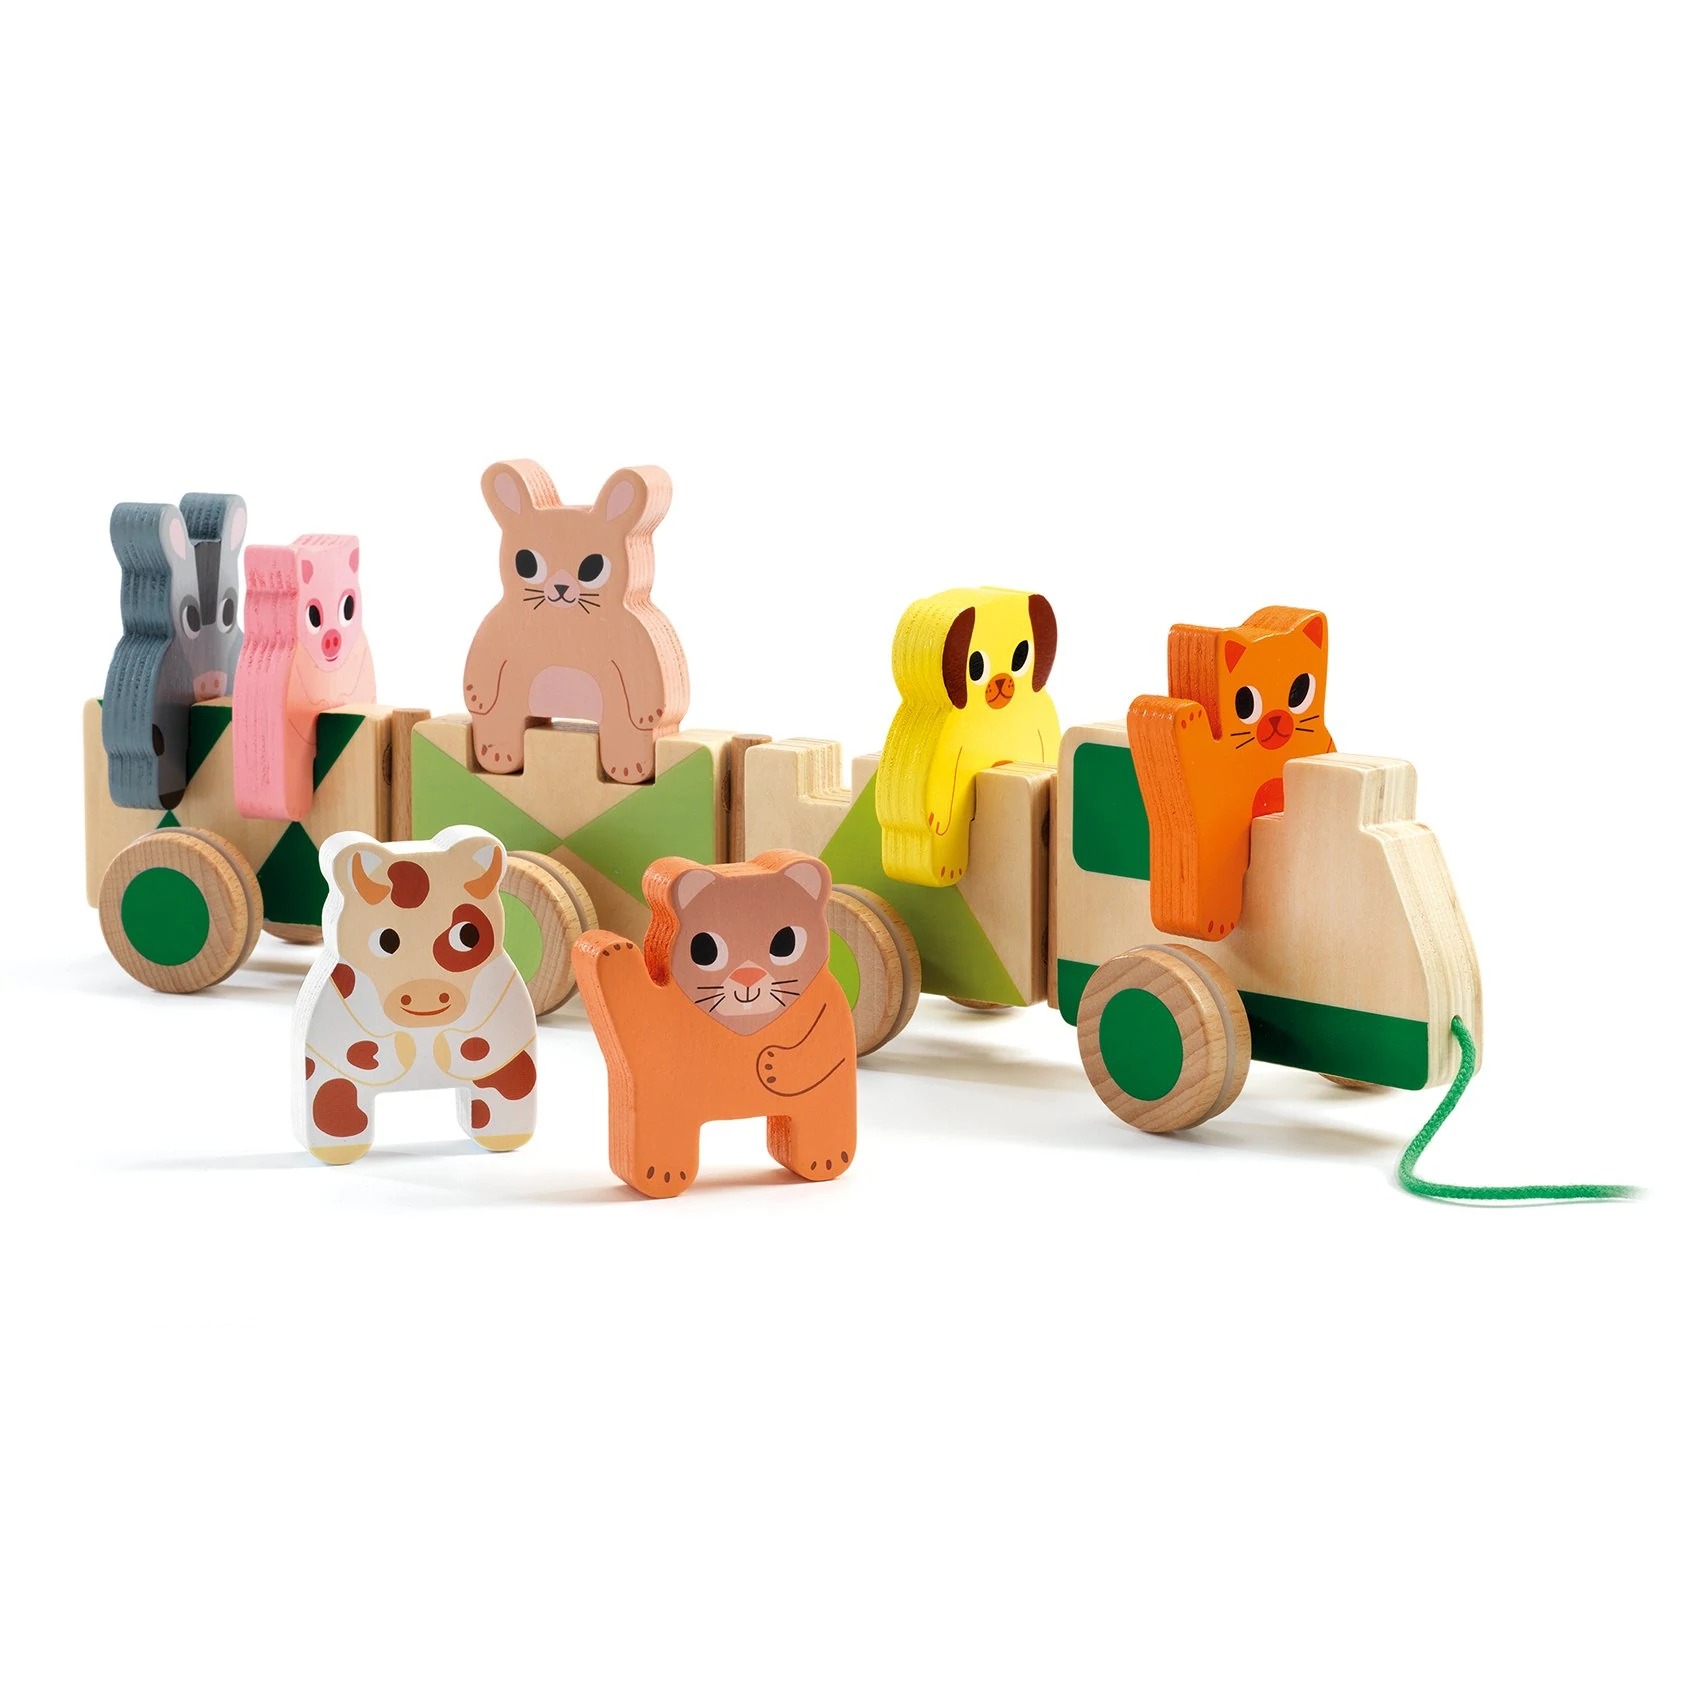 Djeco Trainimo Farm Wooden Pull-Along Activity Toy